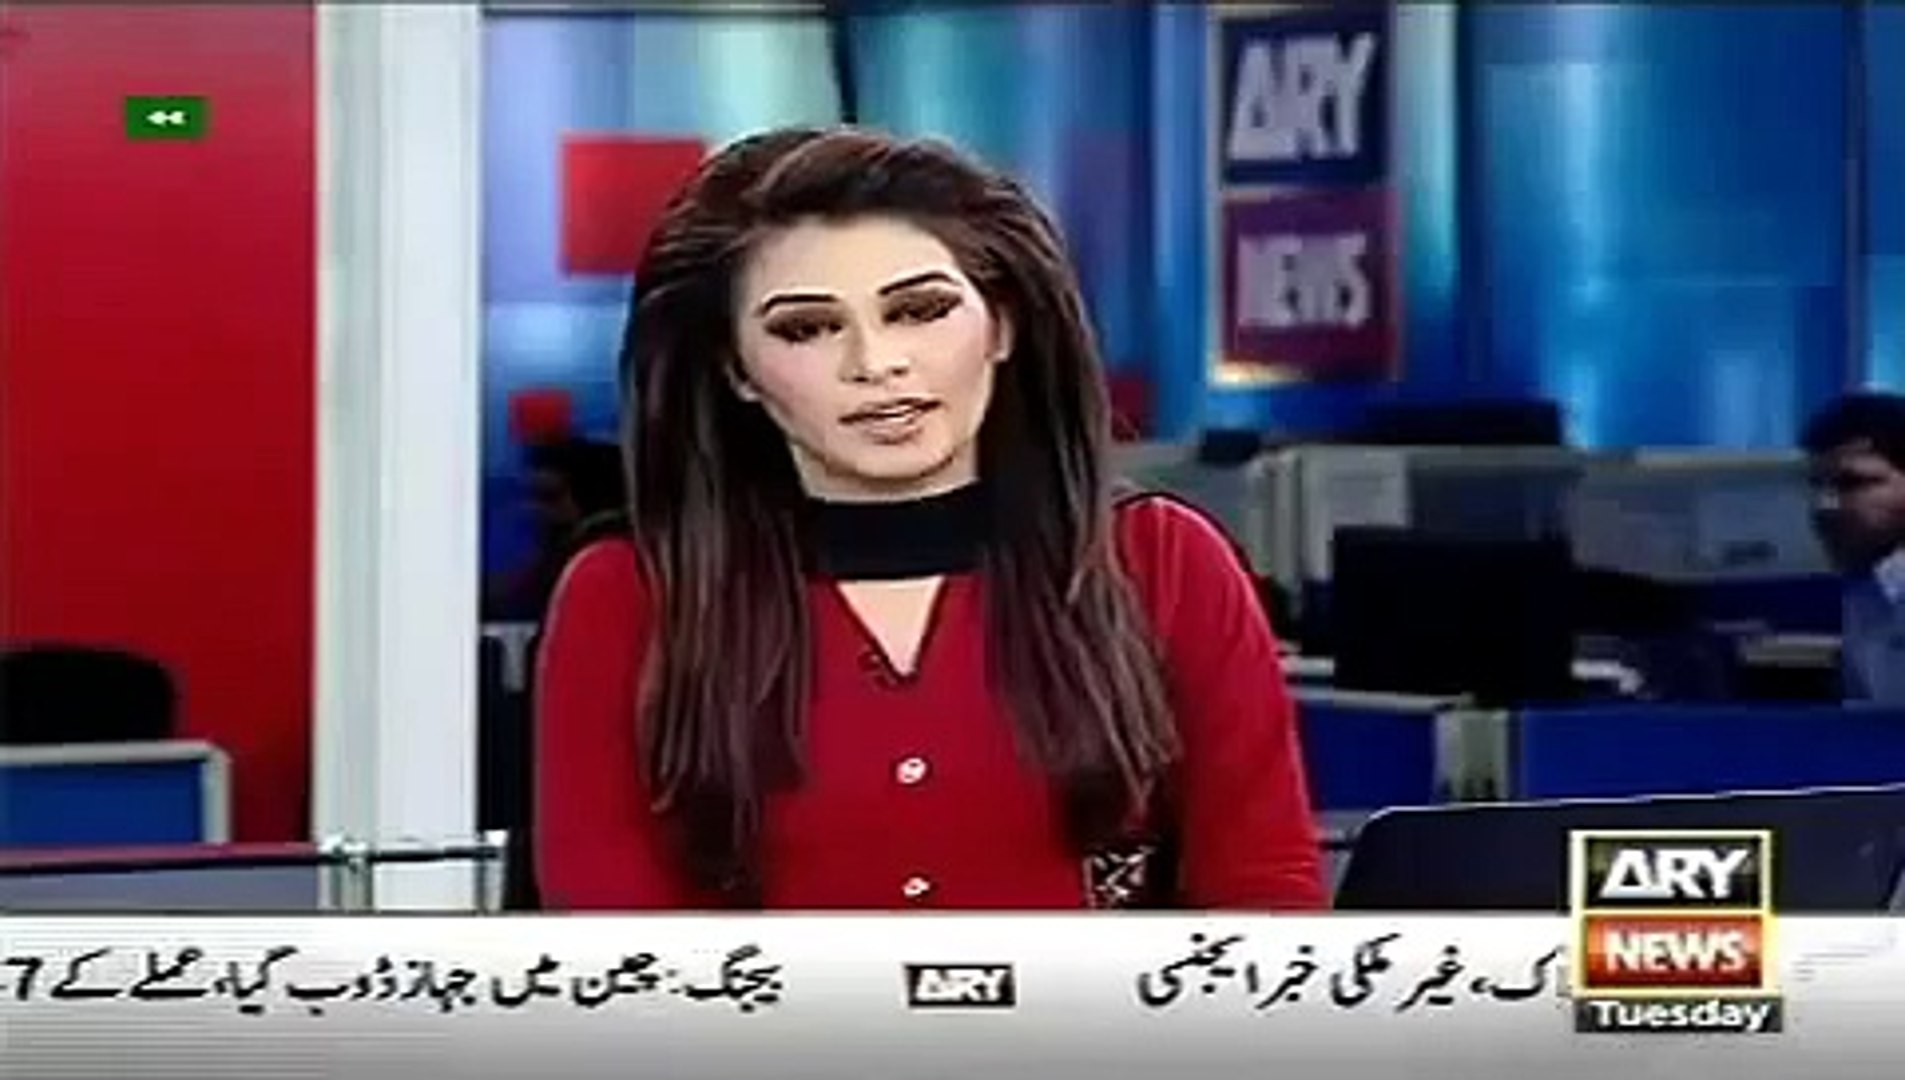 ARY News Headlines 2 June 2015, Latest News Pakistan Report on LB Election Mismanagement